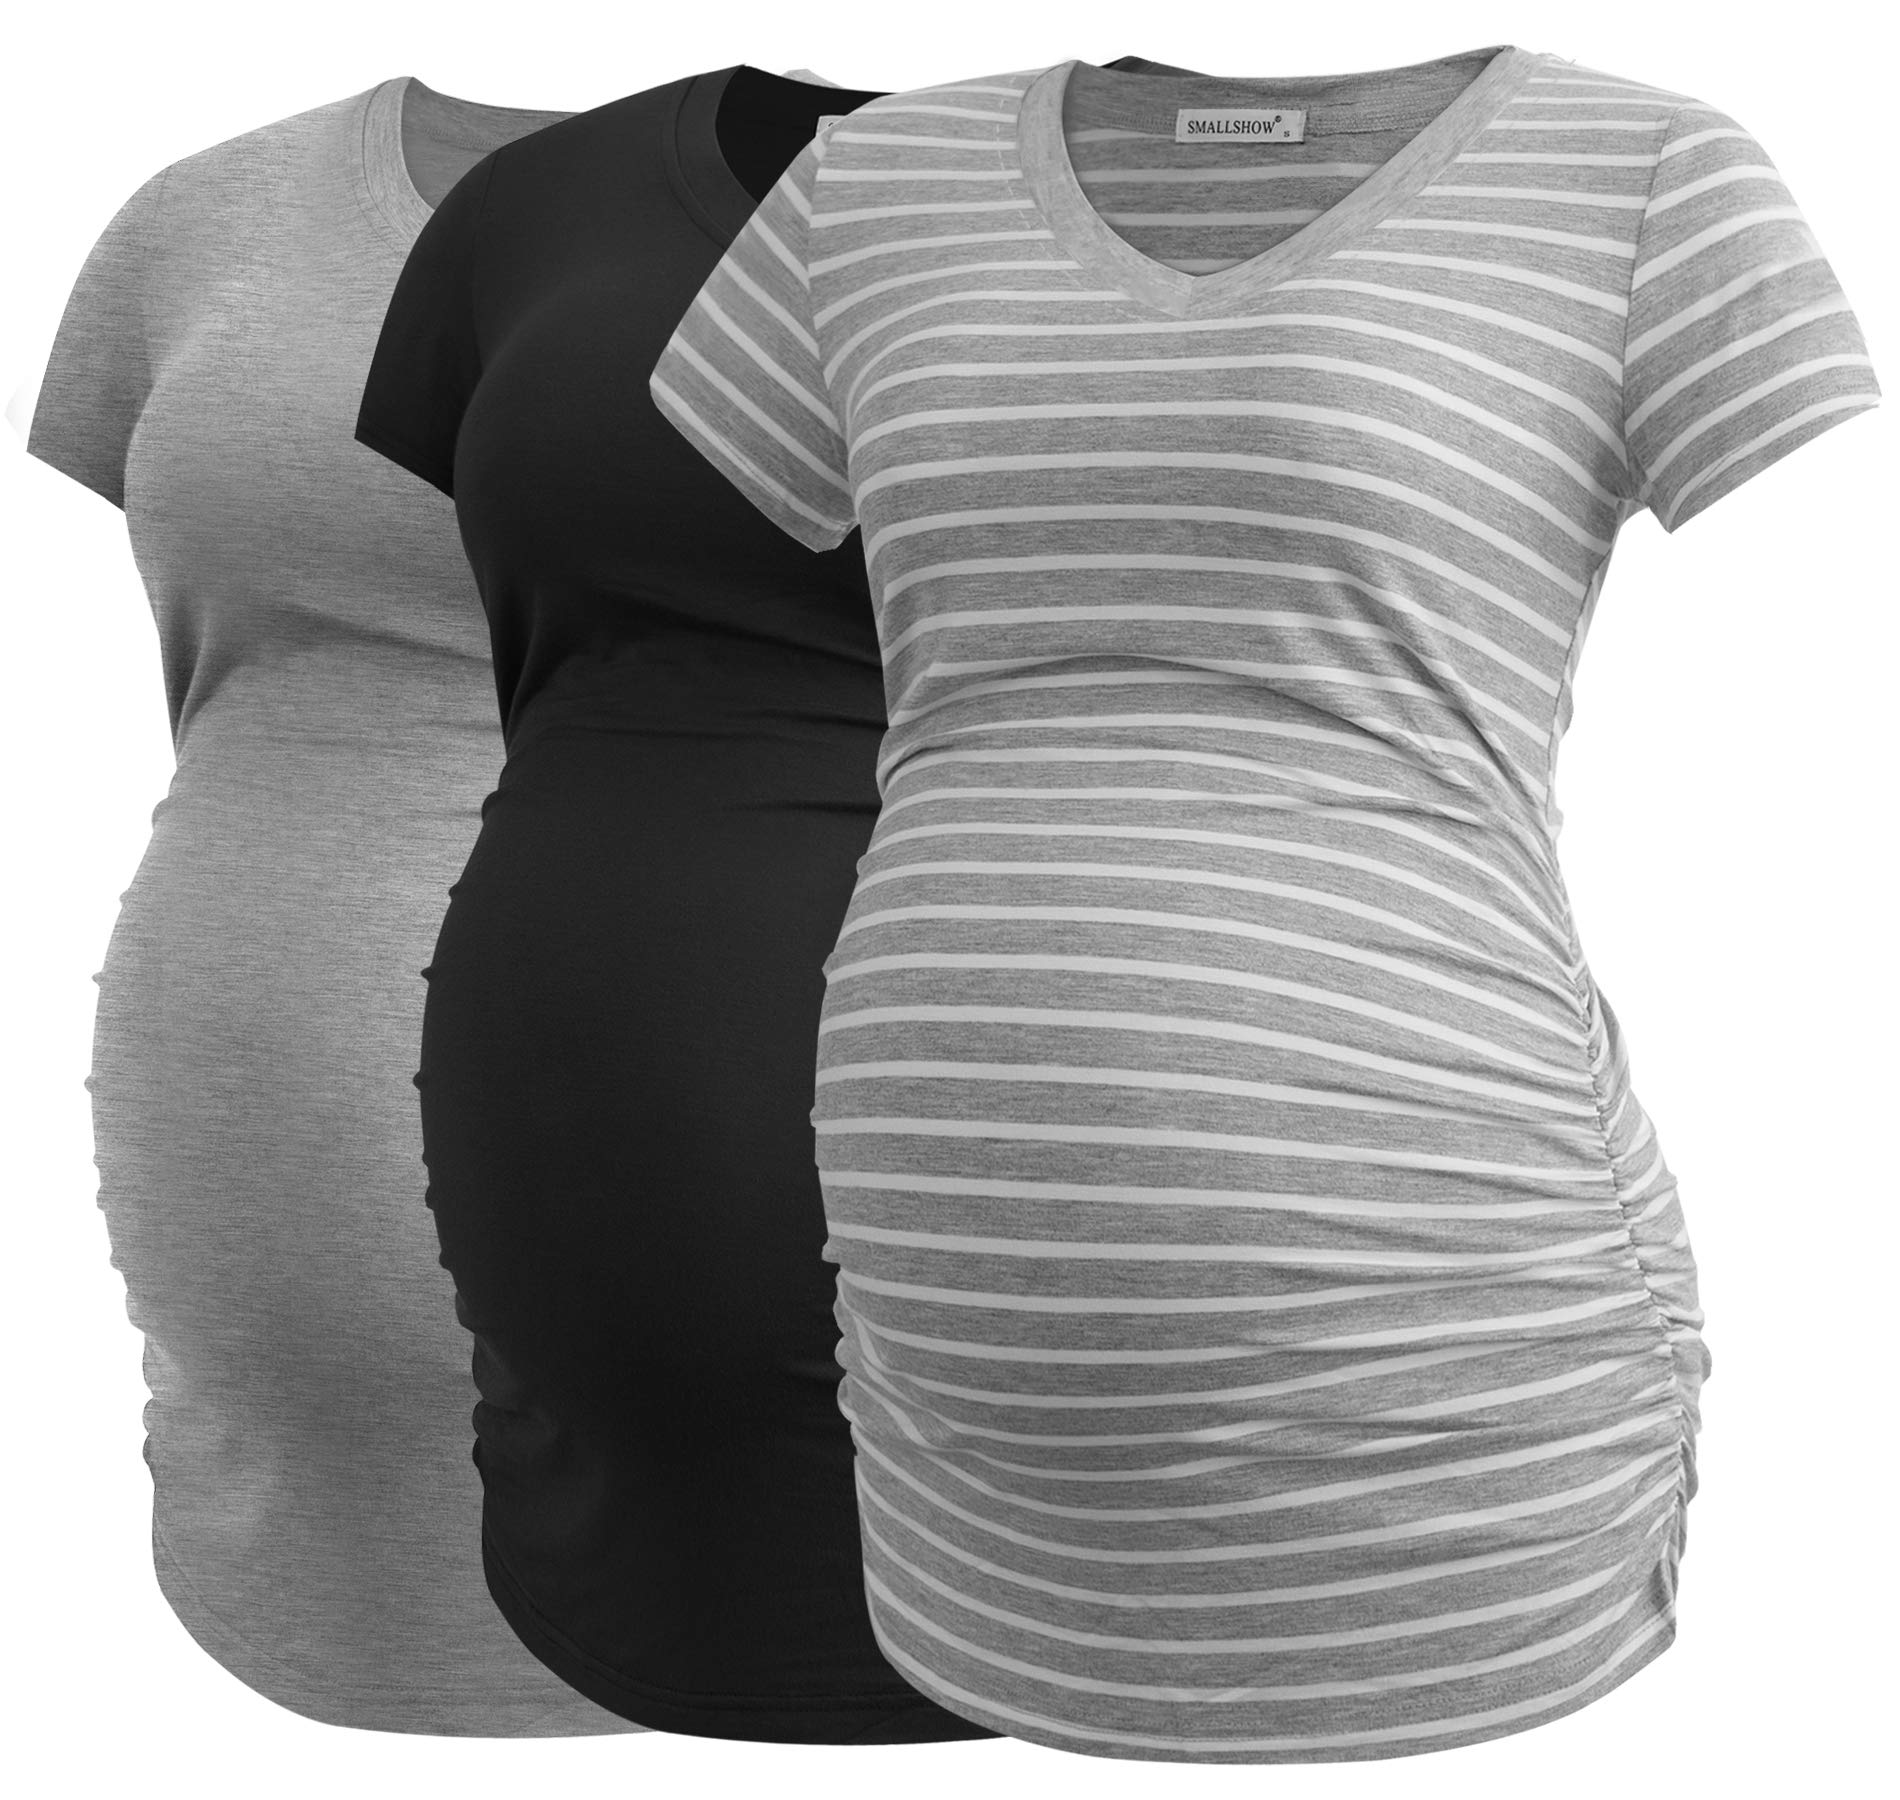 Smallshow Damen Umstandstop V Hals Schwangerschaft Seite Geraffte Umstandskleidung Tops T Shirt 3 Pack,Black-Light Grey-Light Grey Stripe,M